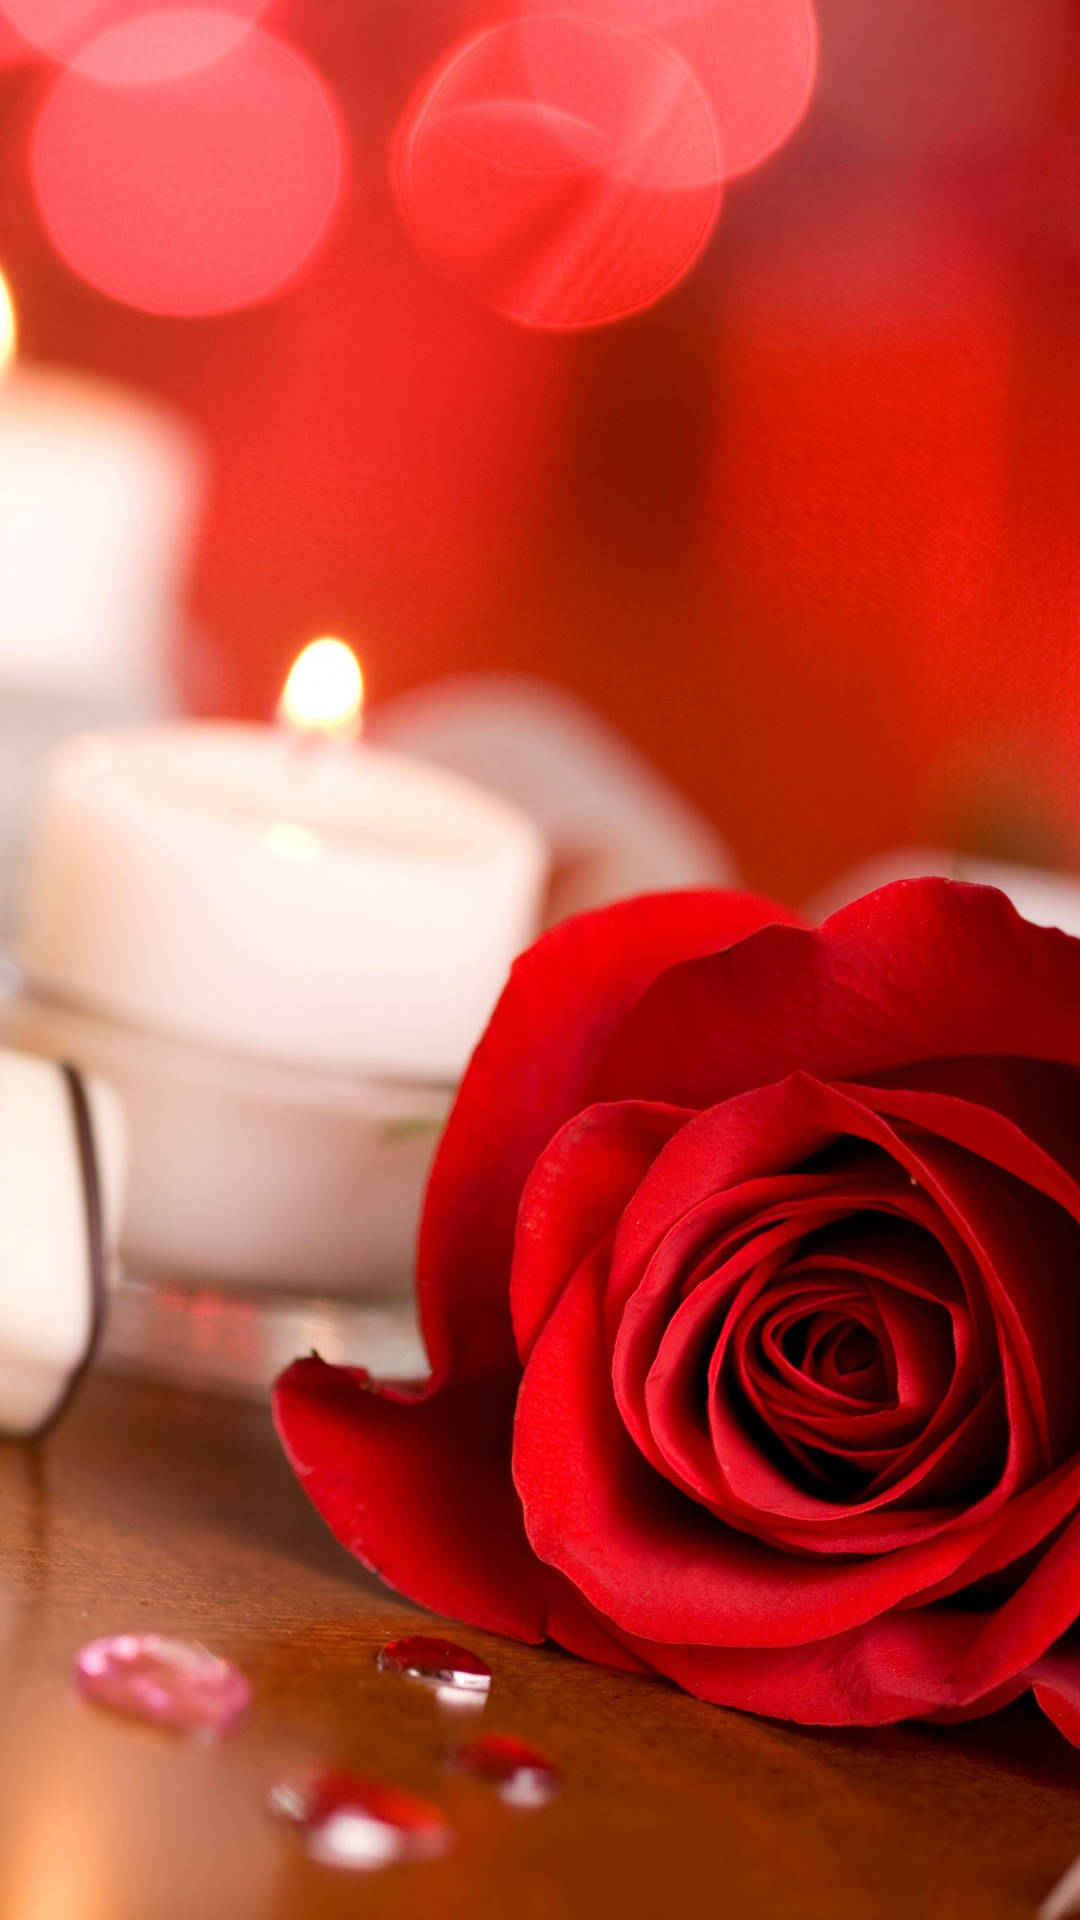 Romantischerose Und Kerze Wallpaper